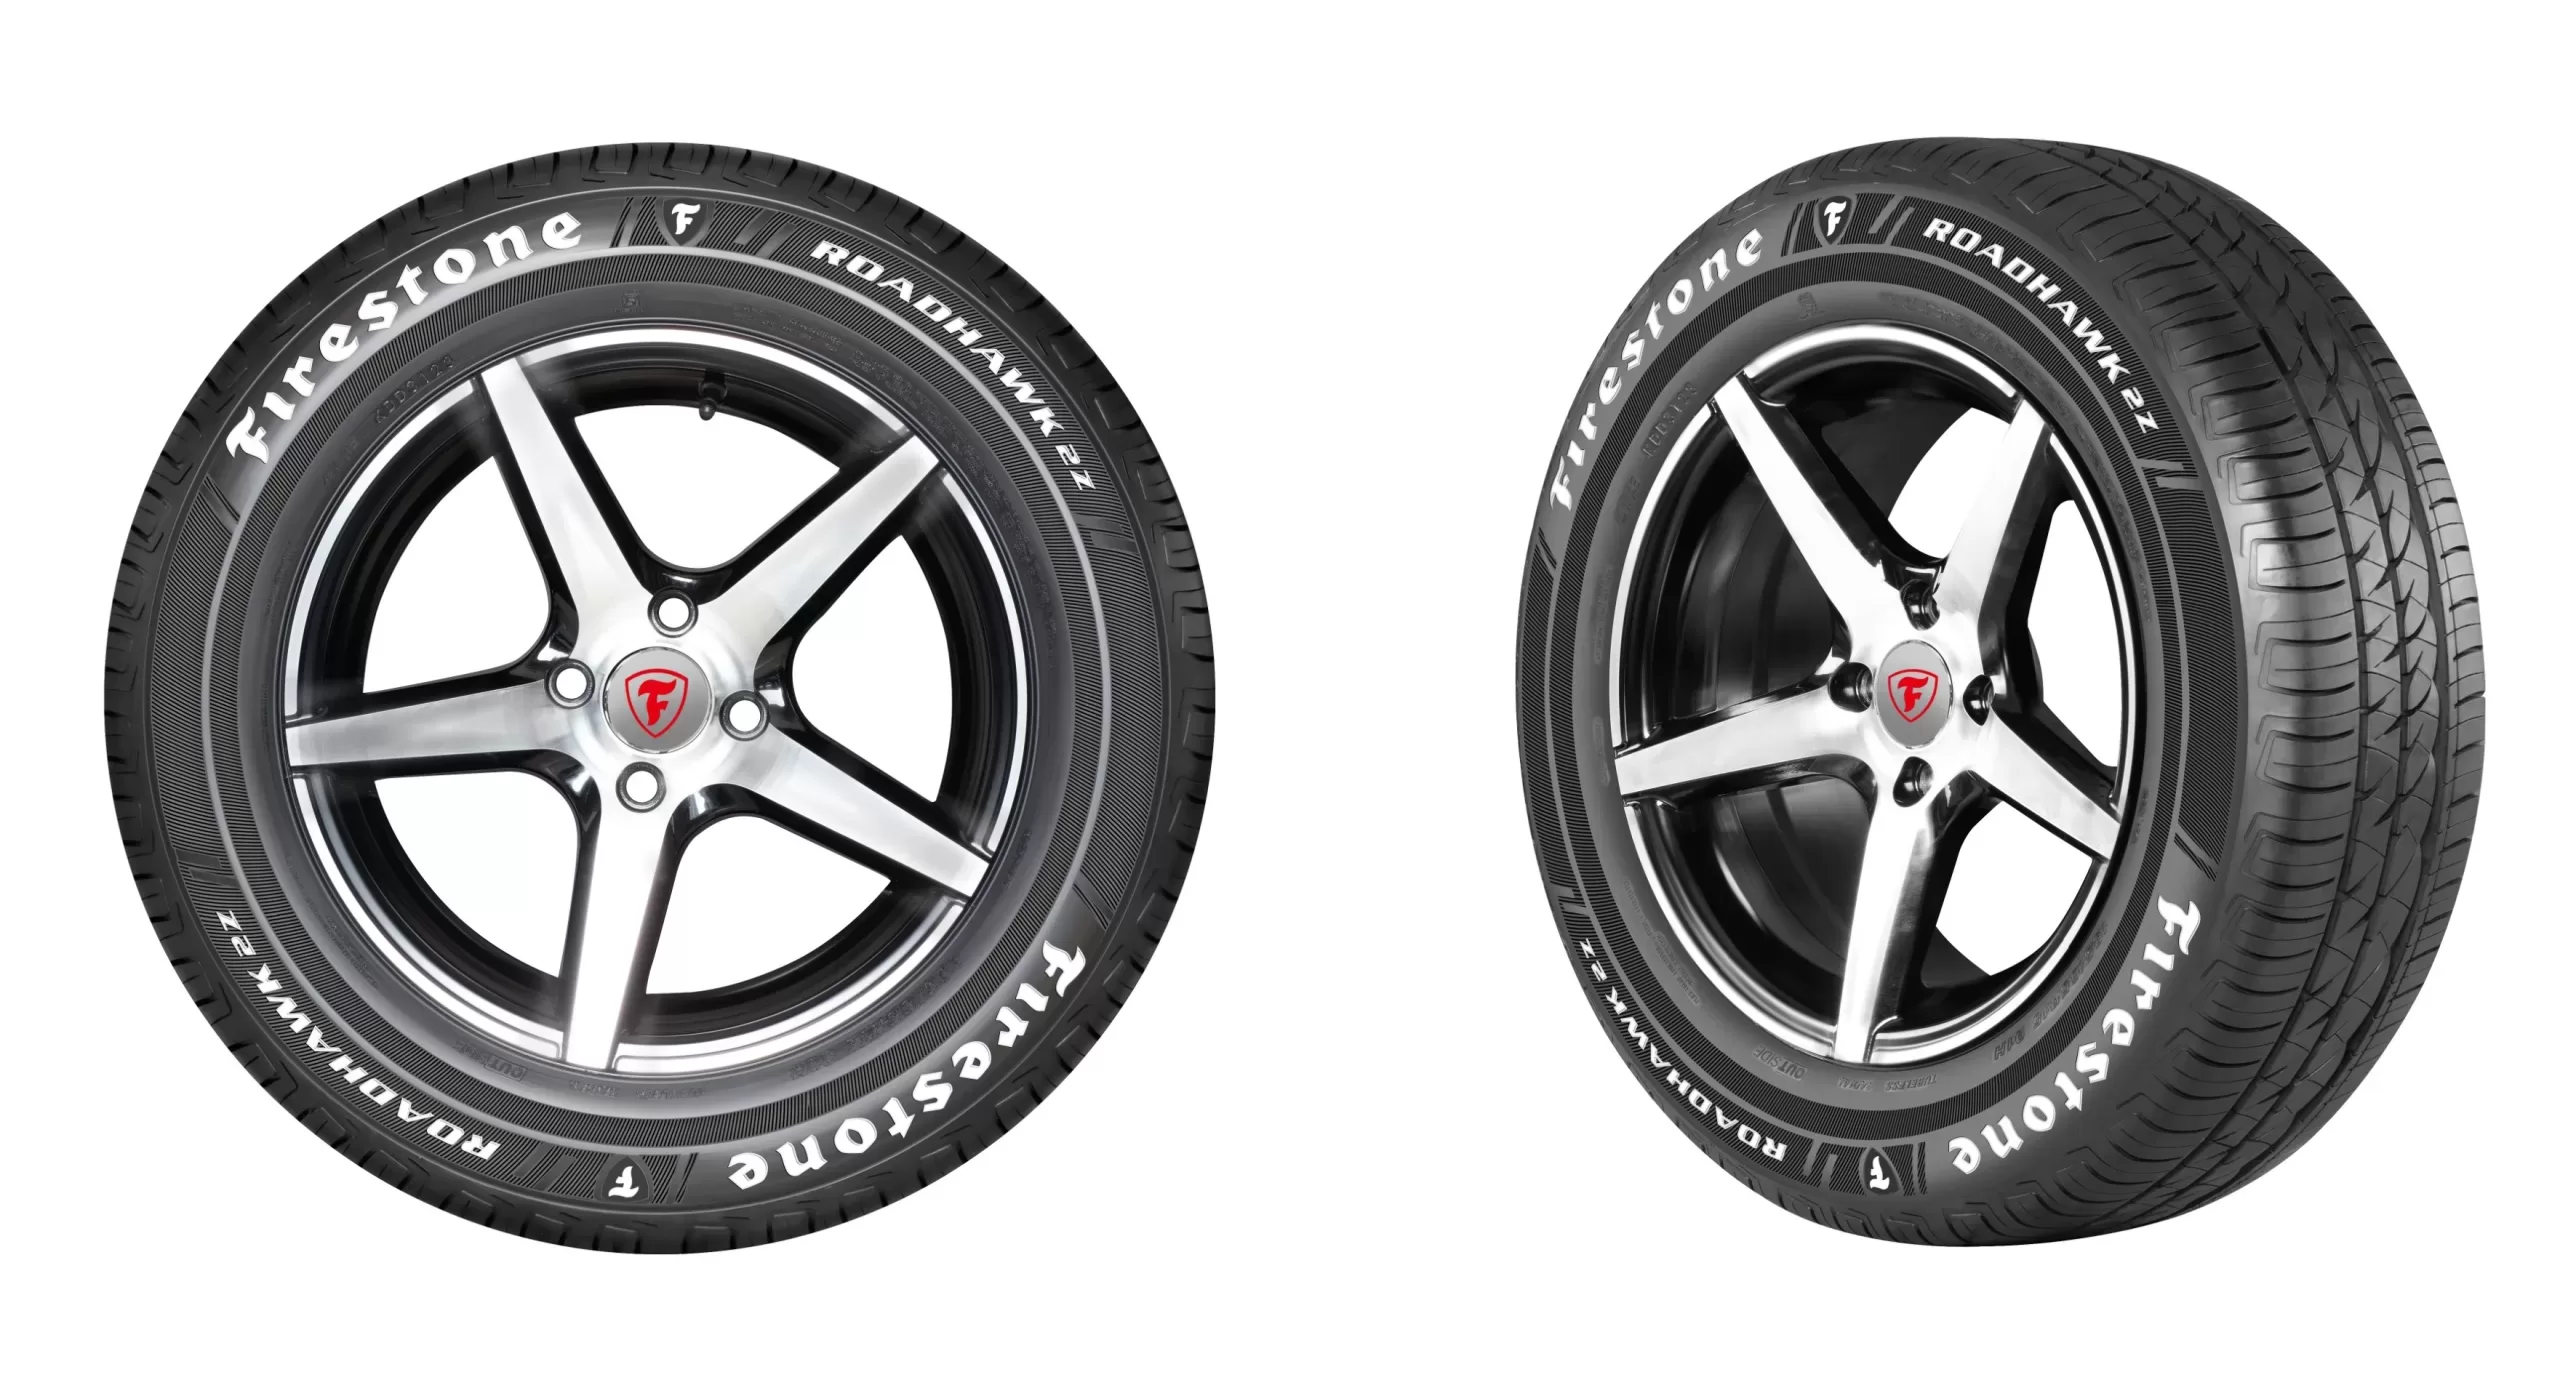 Firestone launches its Roadhawk 2z tire with 5 years warranty